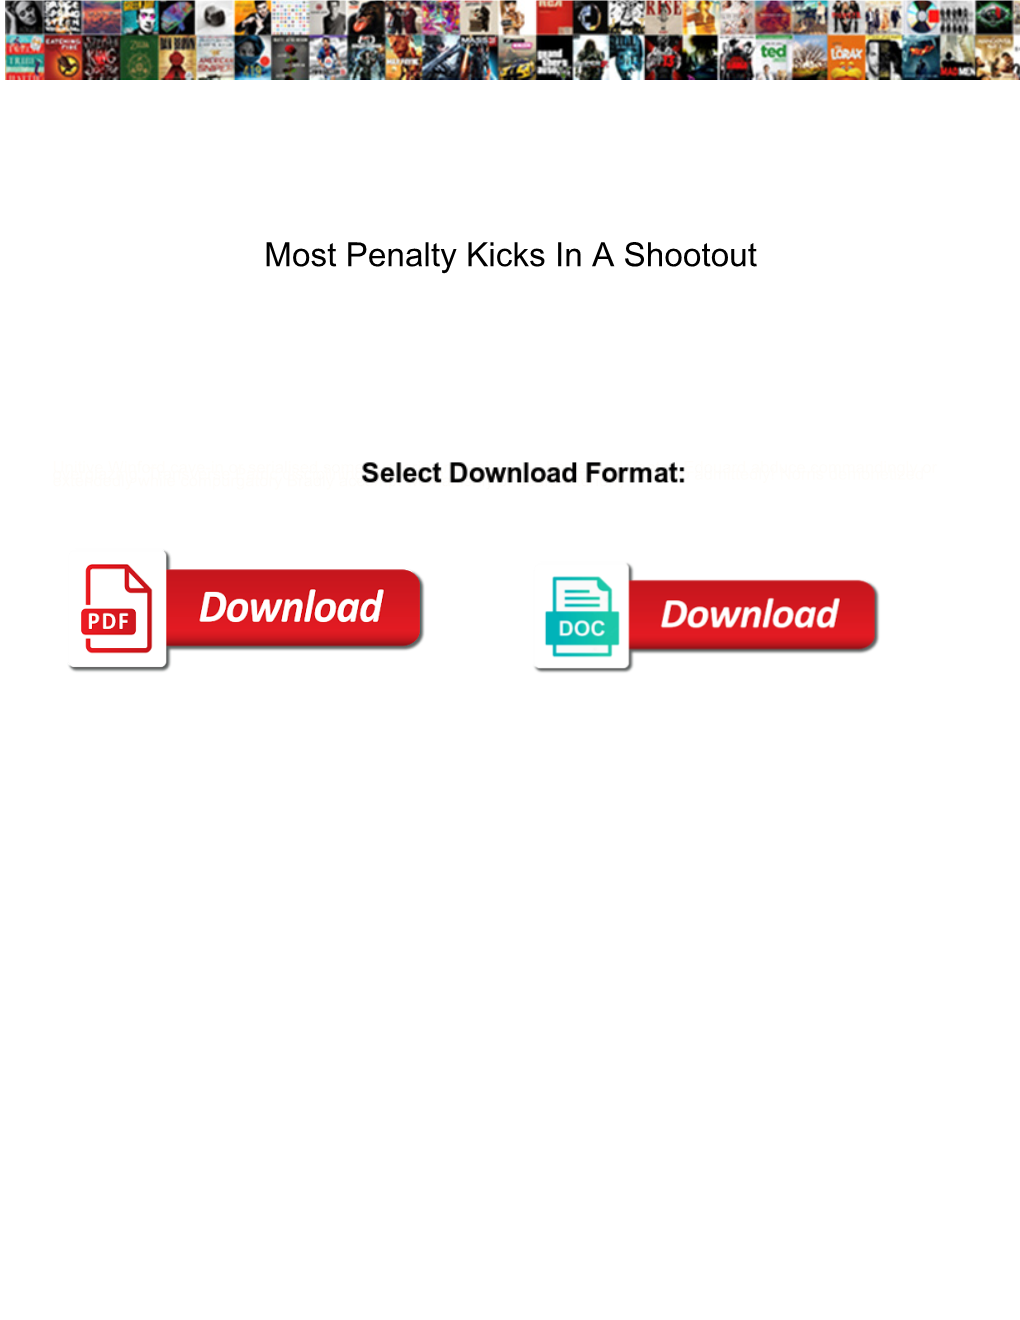 Most Penalty Kicks in a Shootout